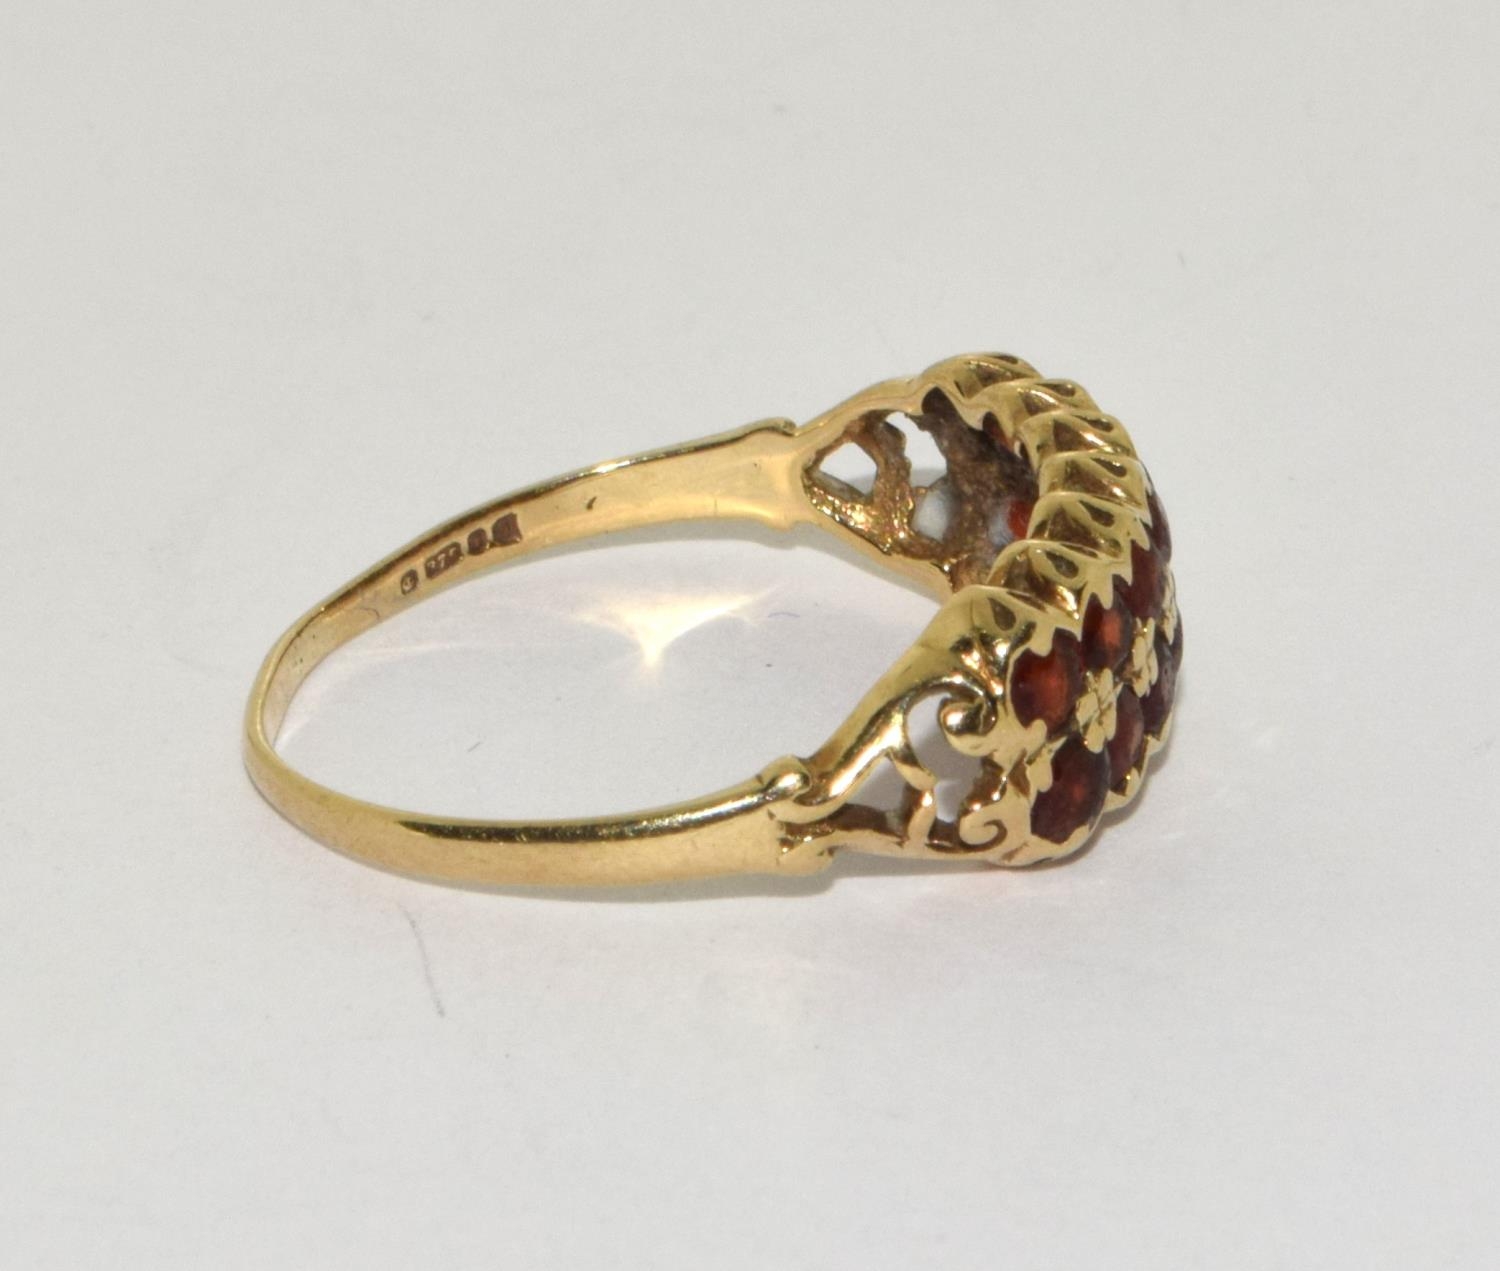 9ct gold ladies twin bar antique set garnet ring size S - Image 4 of 5